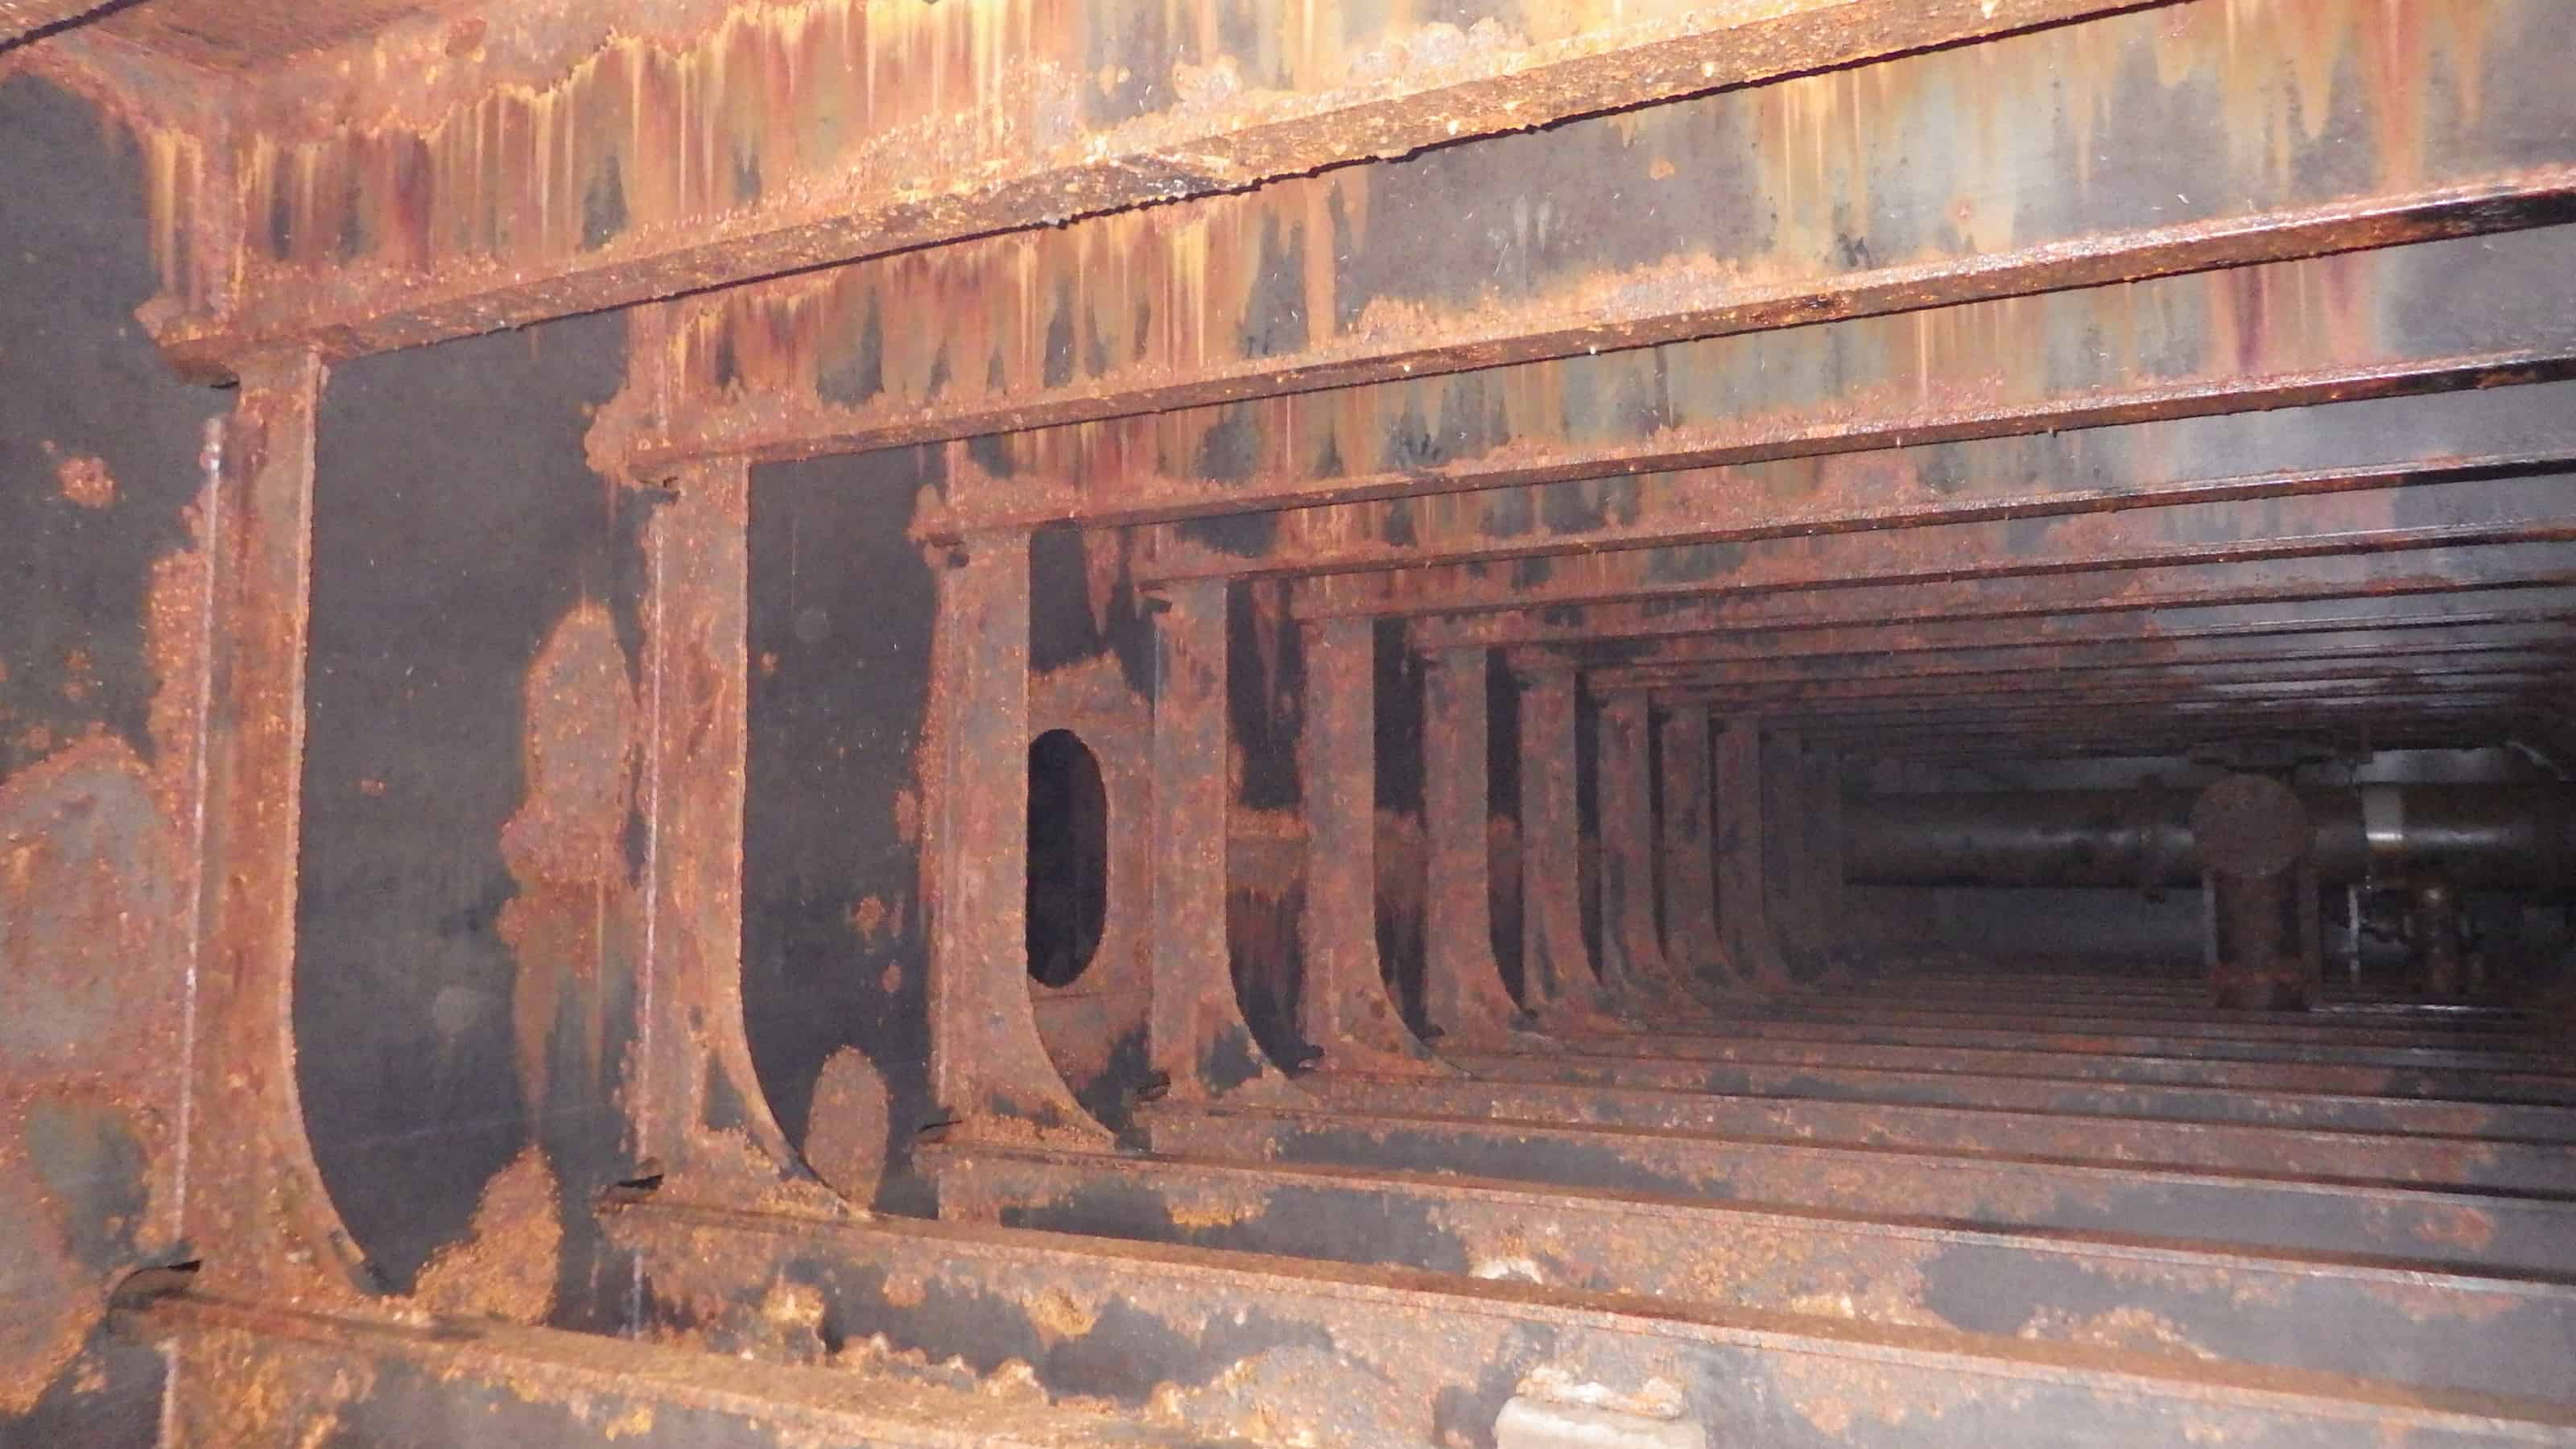 heavily corroded ballast tank internals